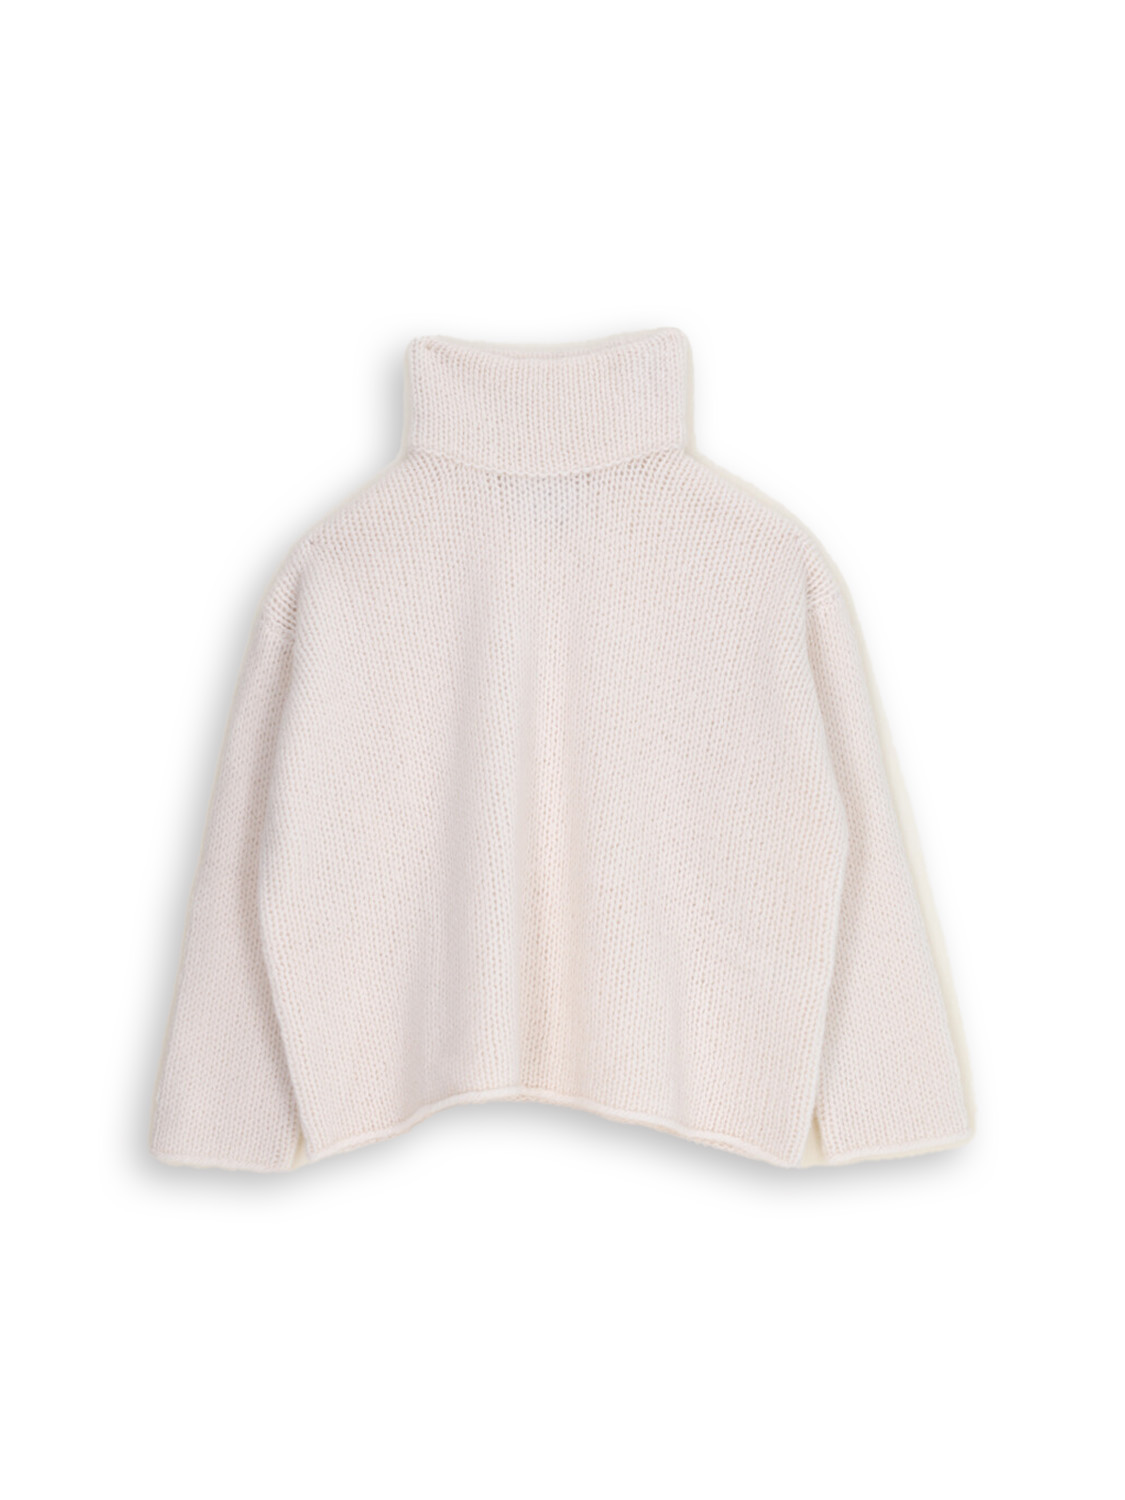 Bray - Cashmere turtleneck sweater